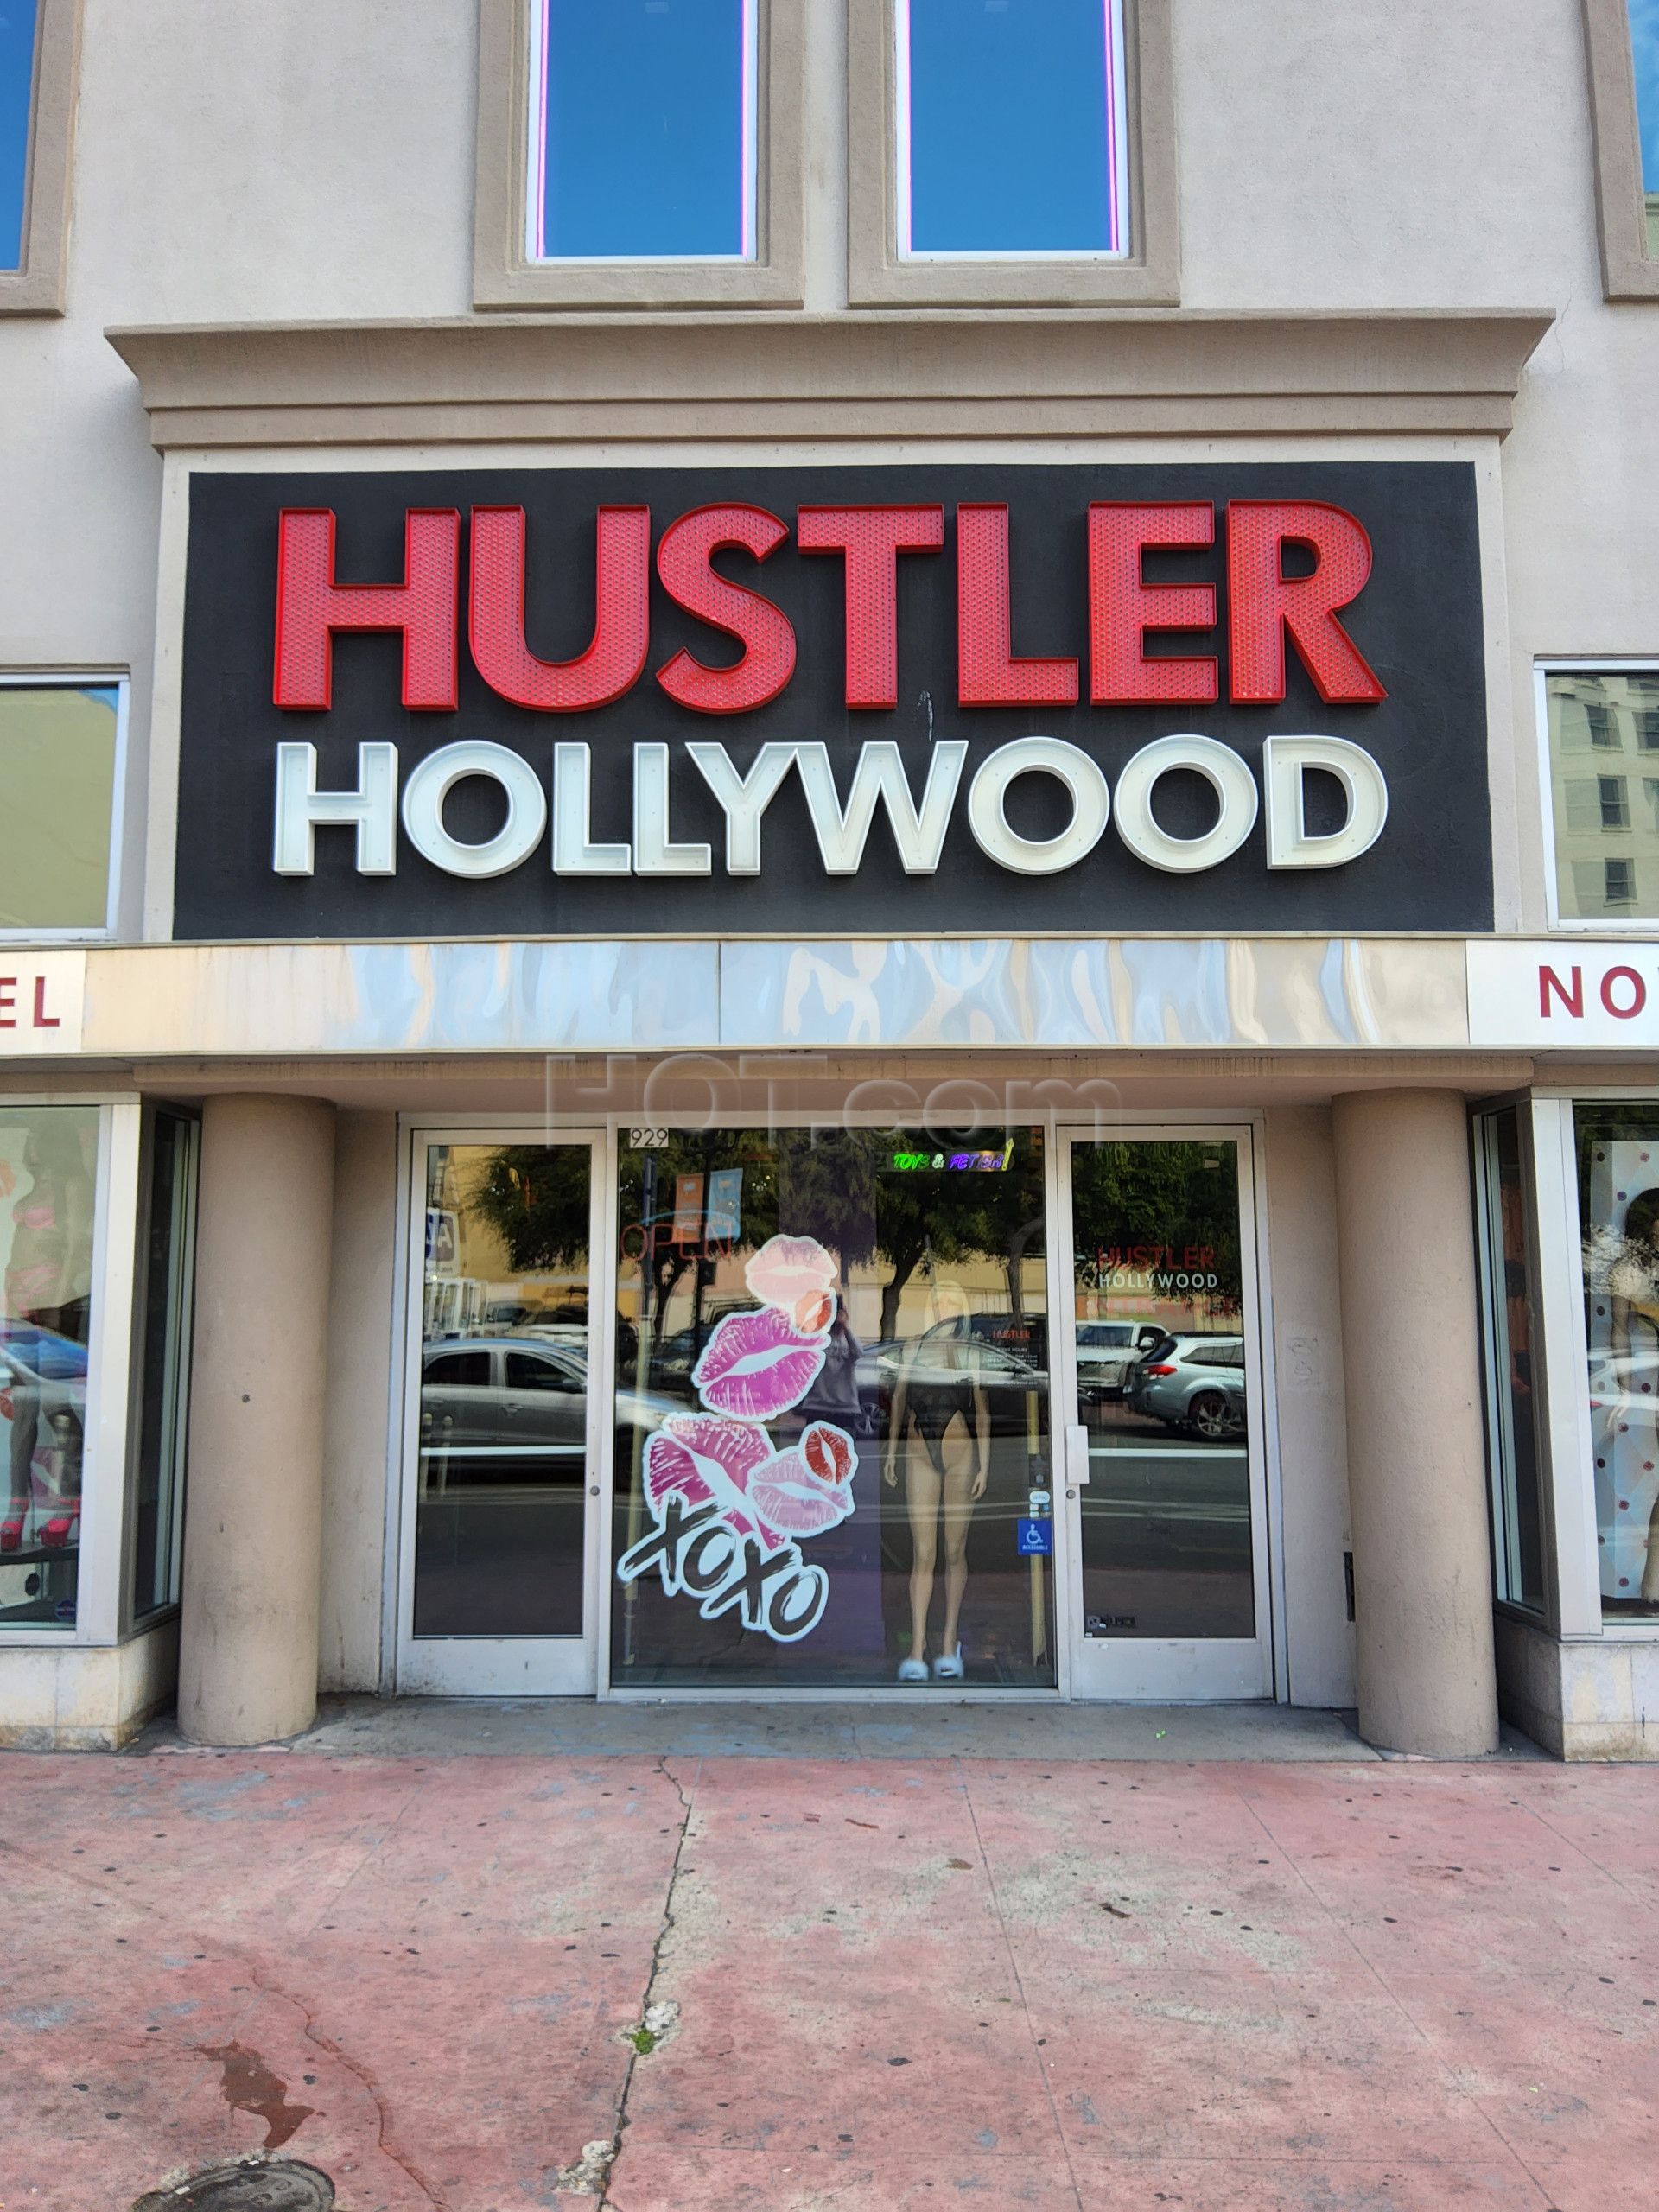 San Diego, California Hustler Hollywood